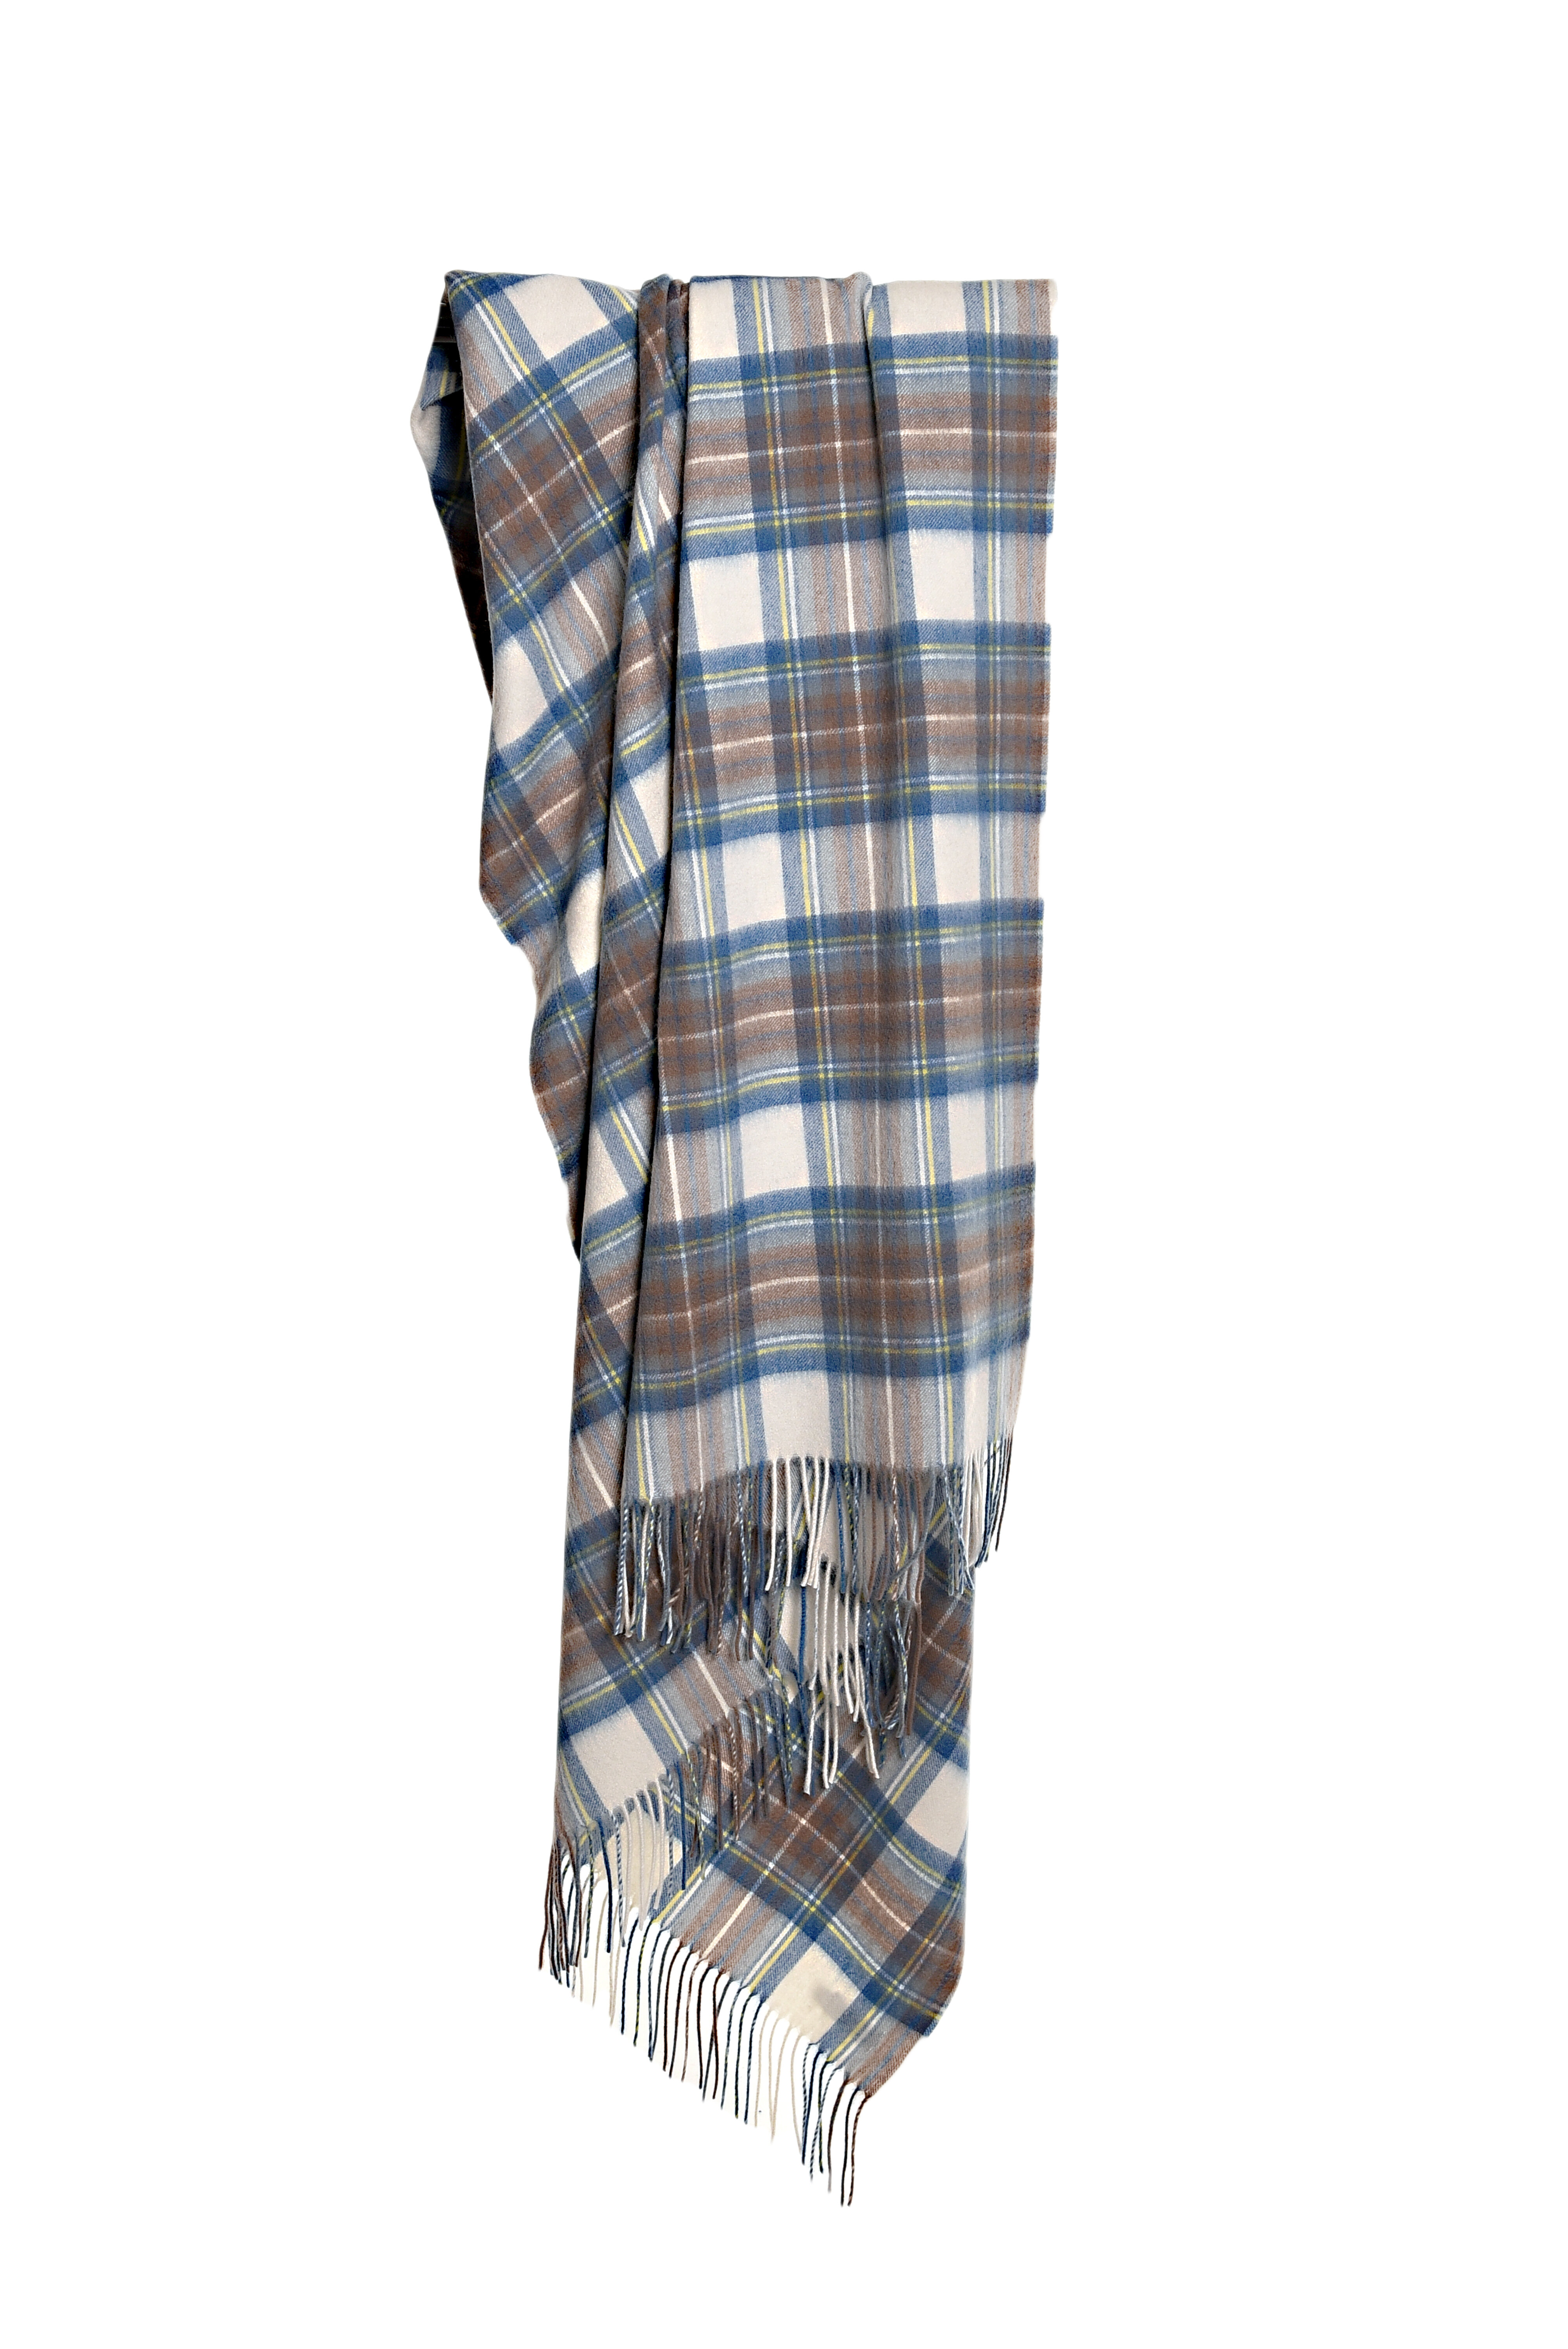 Плед из шерсти ягненка Tweedmill (Великобритания) Prestige Lambswool Tartan - Muted Blue Dress Stewart. Шотландская клетка. - фотография № 2